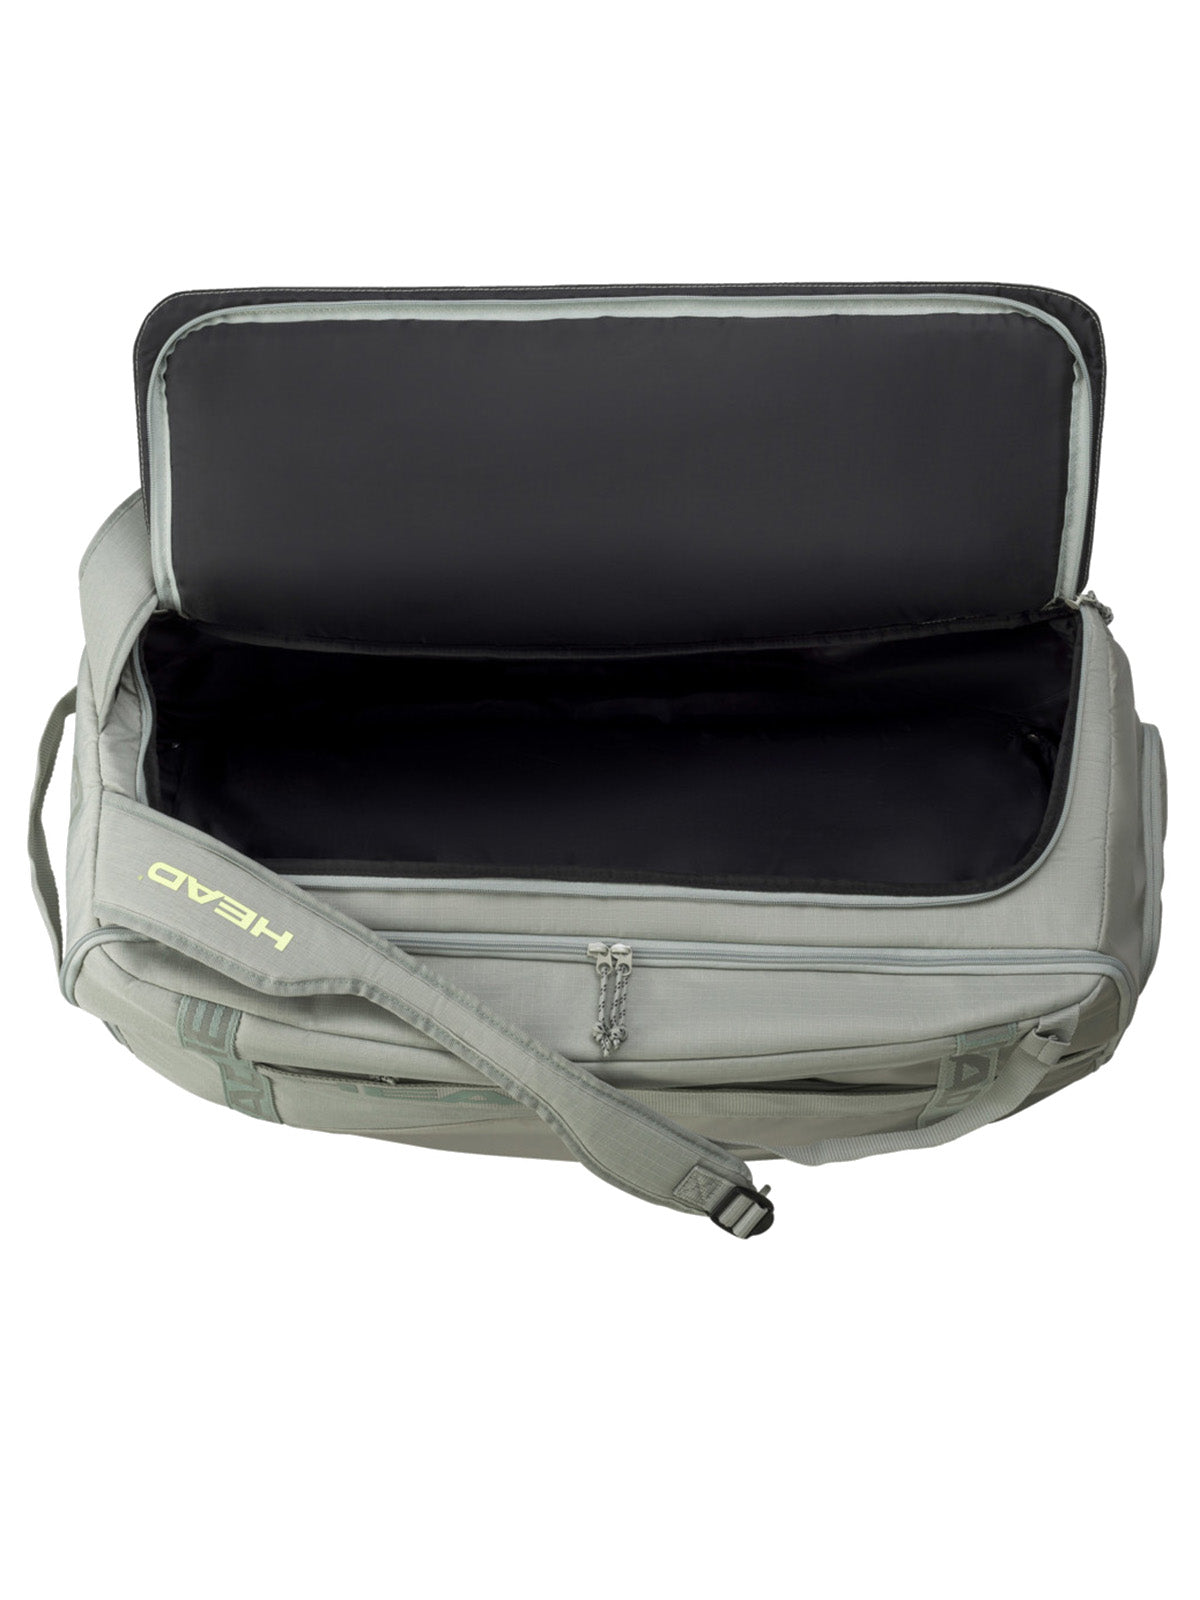 Head Unisex Equipment Bags - Head Pro Duffle Bag L - Green